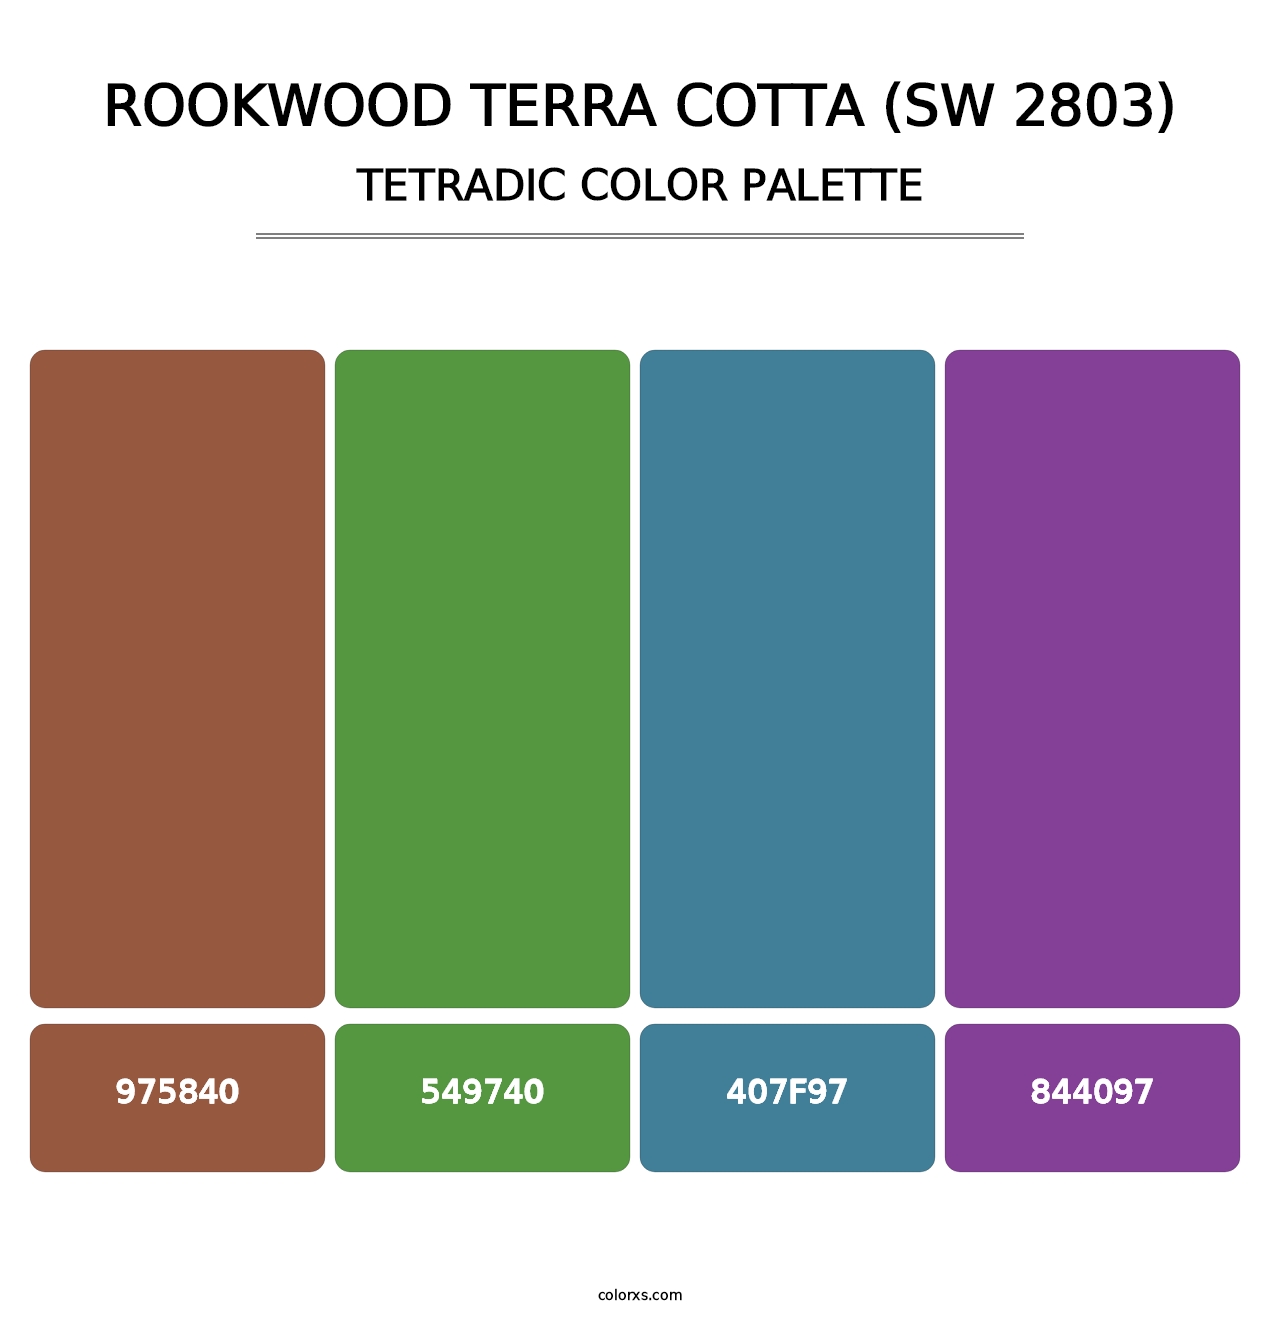 Rookwood Terra Cotta (SW 2803) - Tetradic Color Palette